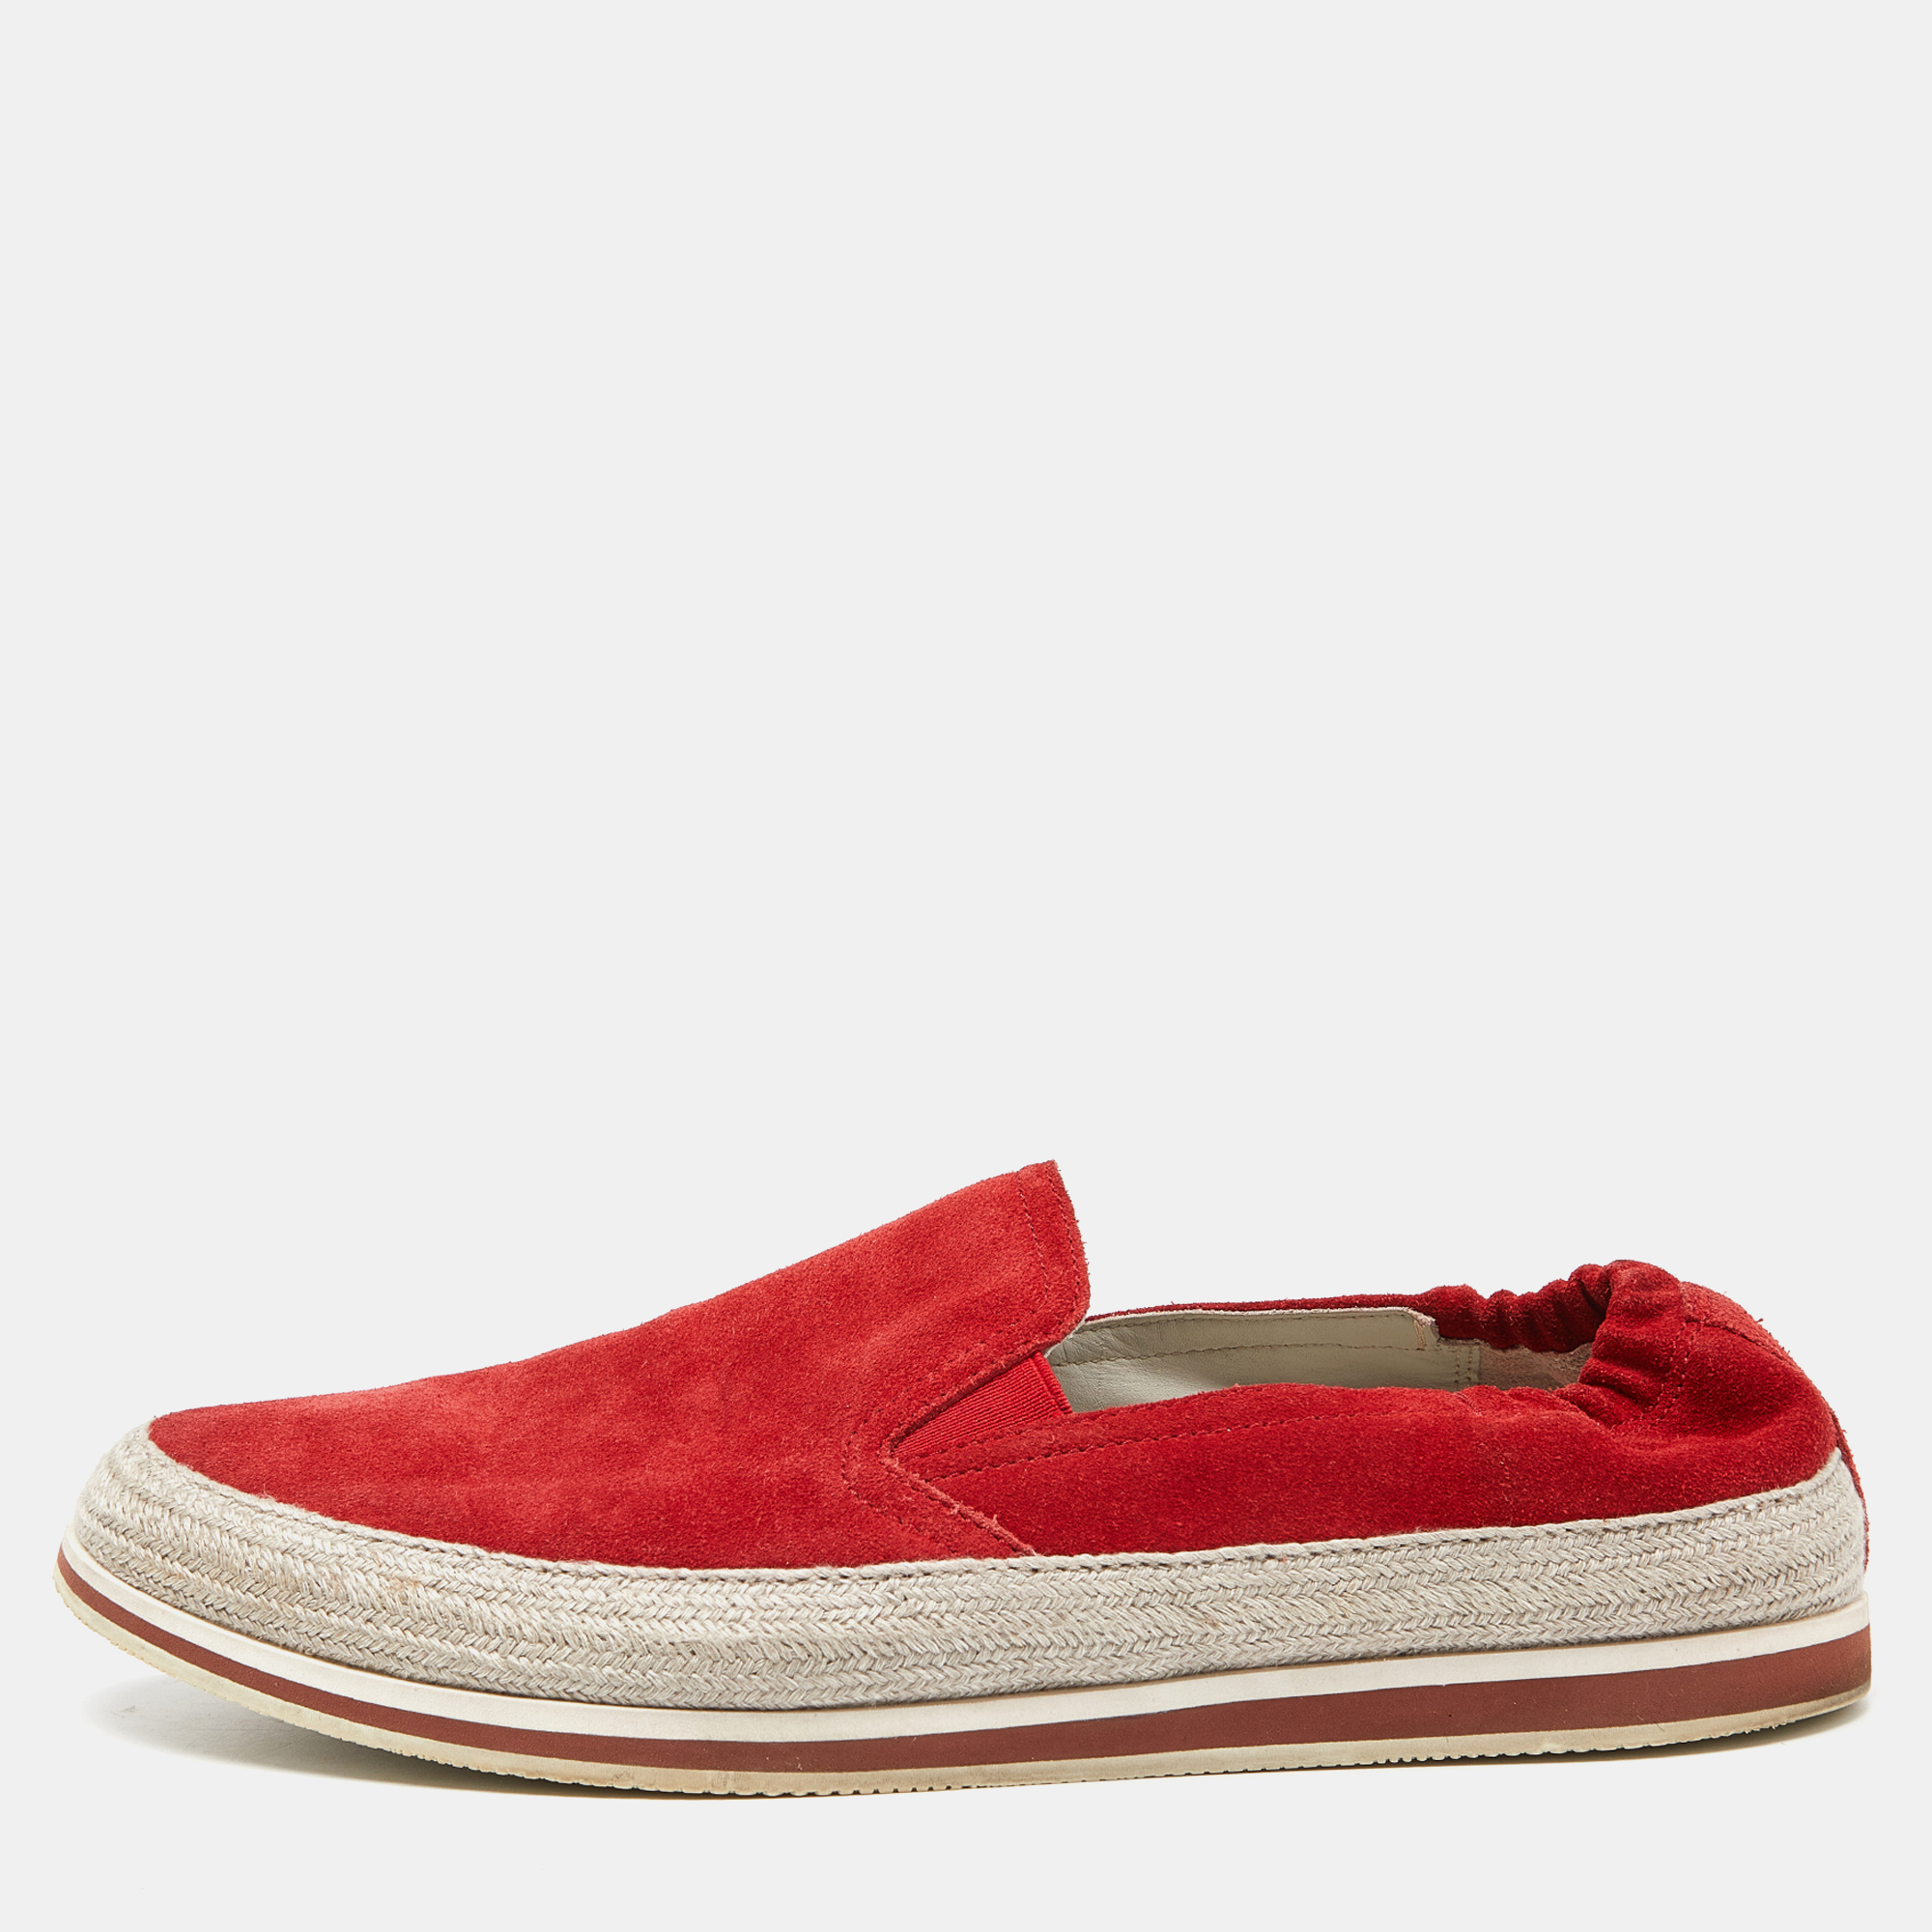 Prada Sport Red Suede Espadrille Slip On Sneakers Size 40.5